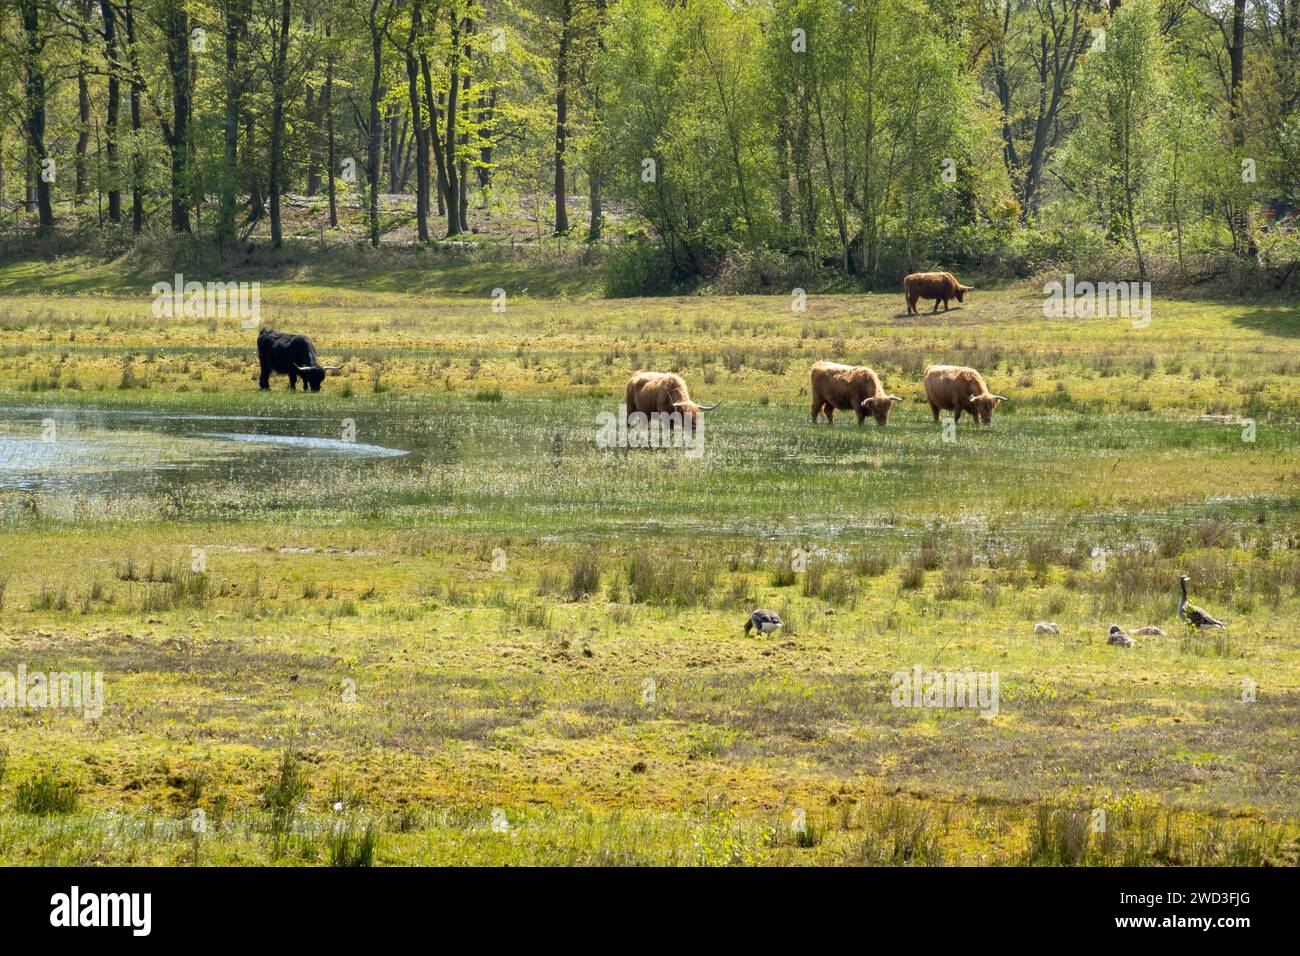 Herd of Scottisch Highland cows grazing near pond Laarder Wasmeer in nature reserve Goois Natuurreservaat, Hilversum, Noord-Holland, Netherlands Stock Photo